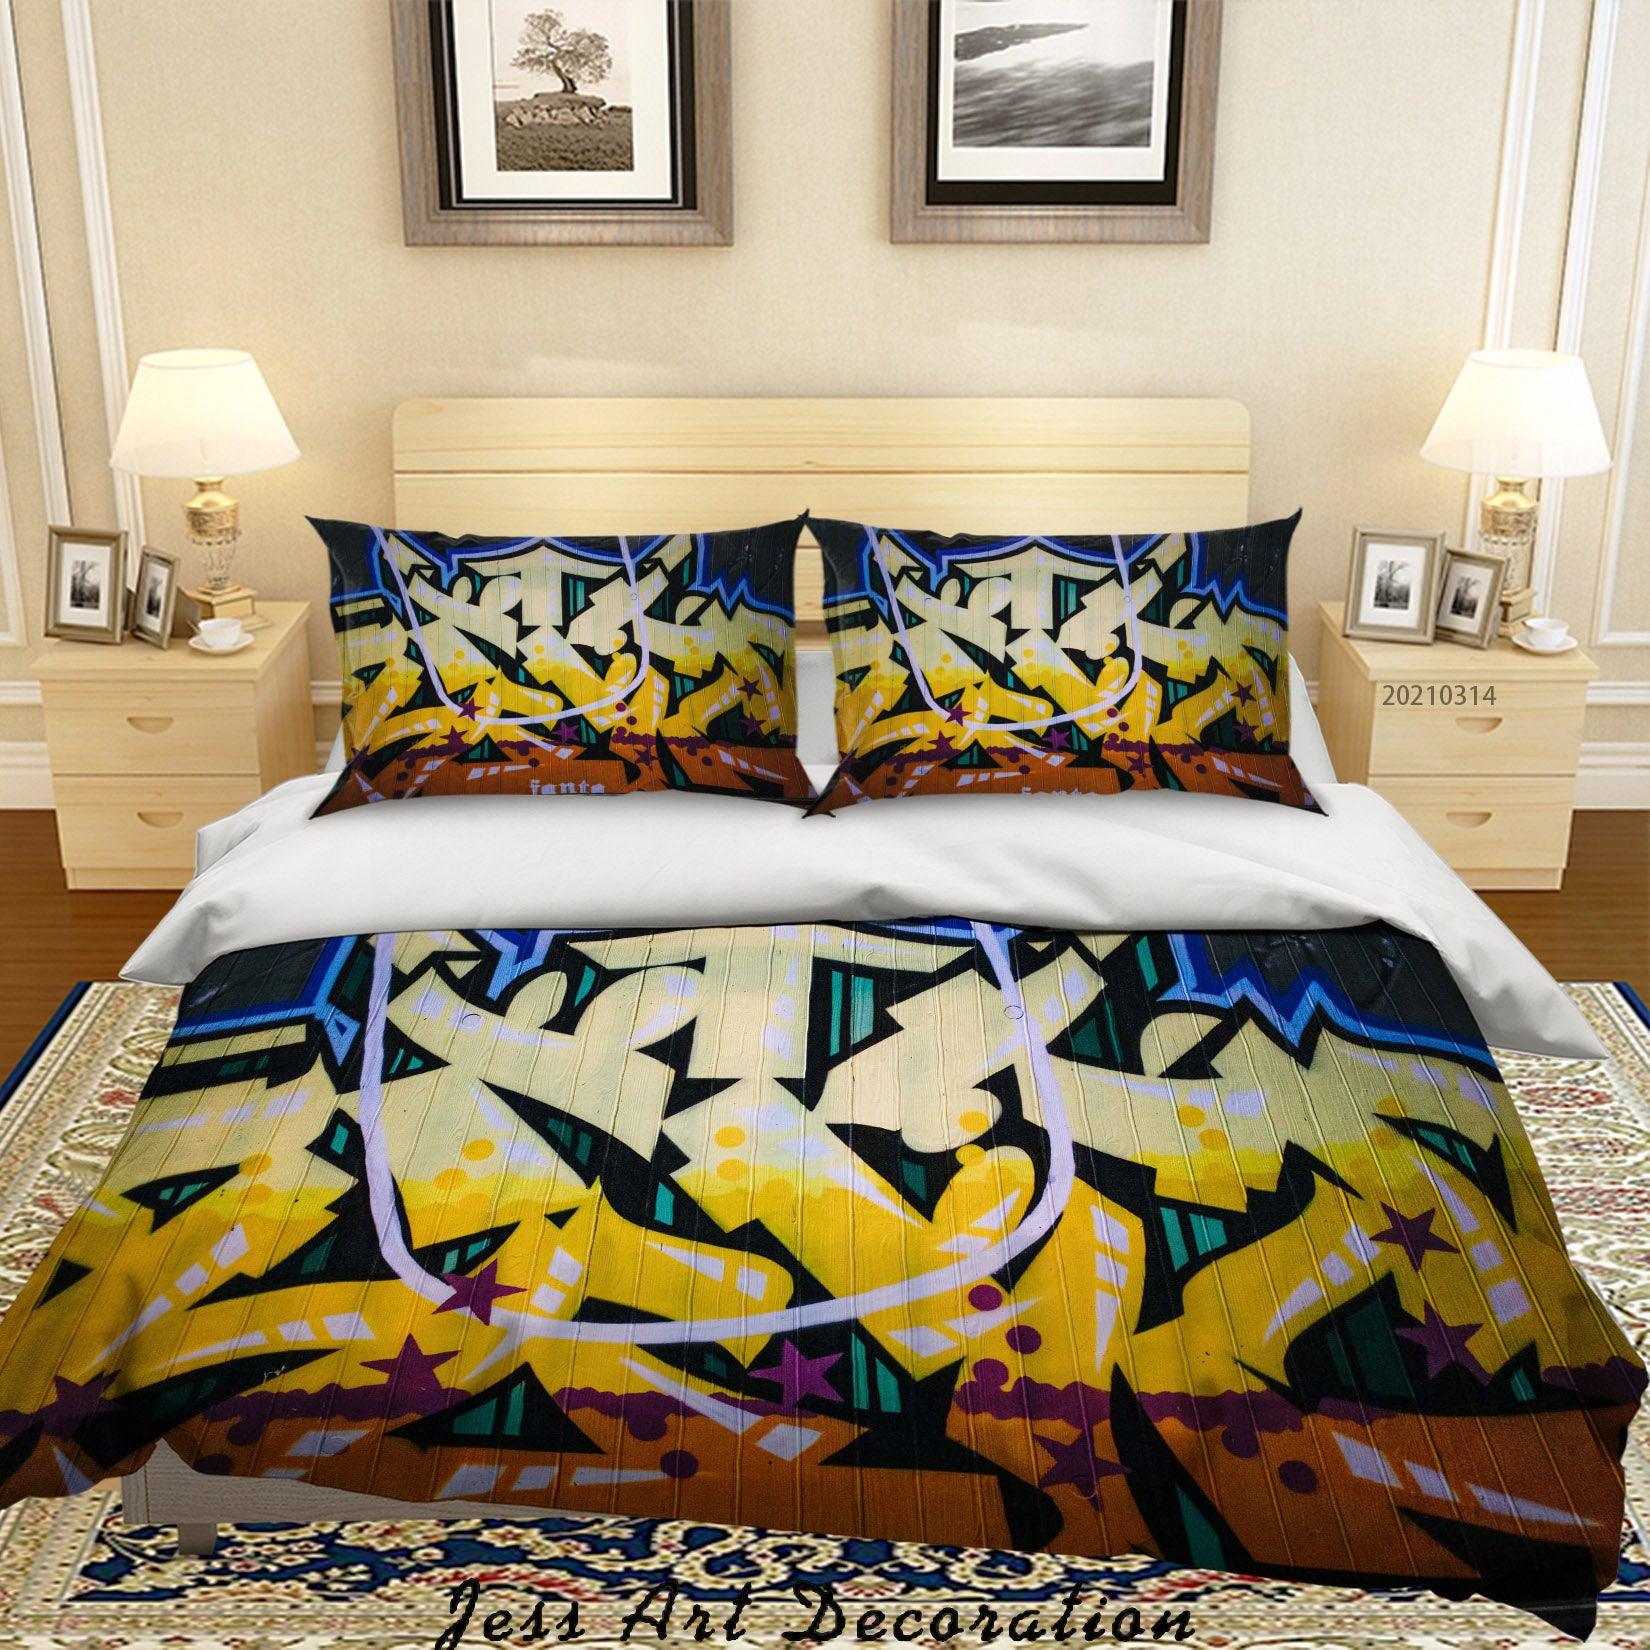 3D Abstract Color Graffiti Quilt Cover Set Bedding Set Duvet Cover Pillowcases 167- Jess Art Decoration